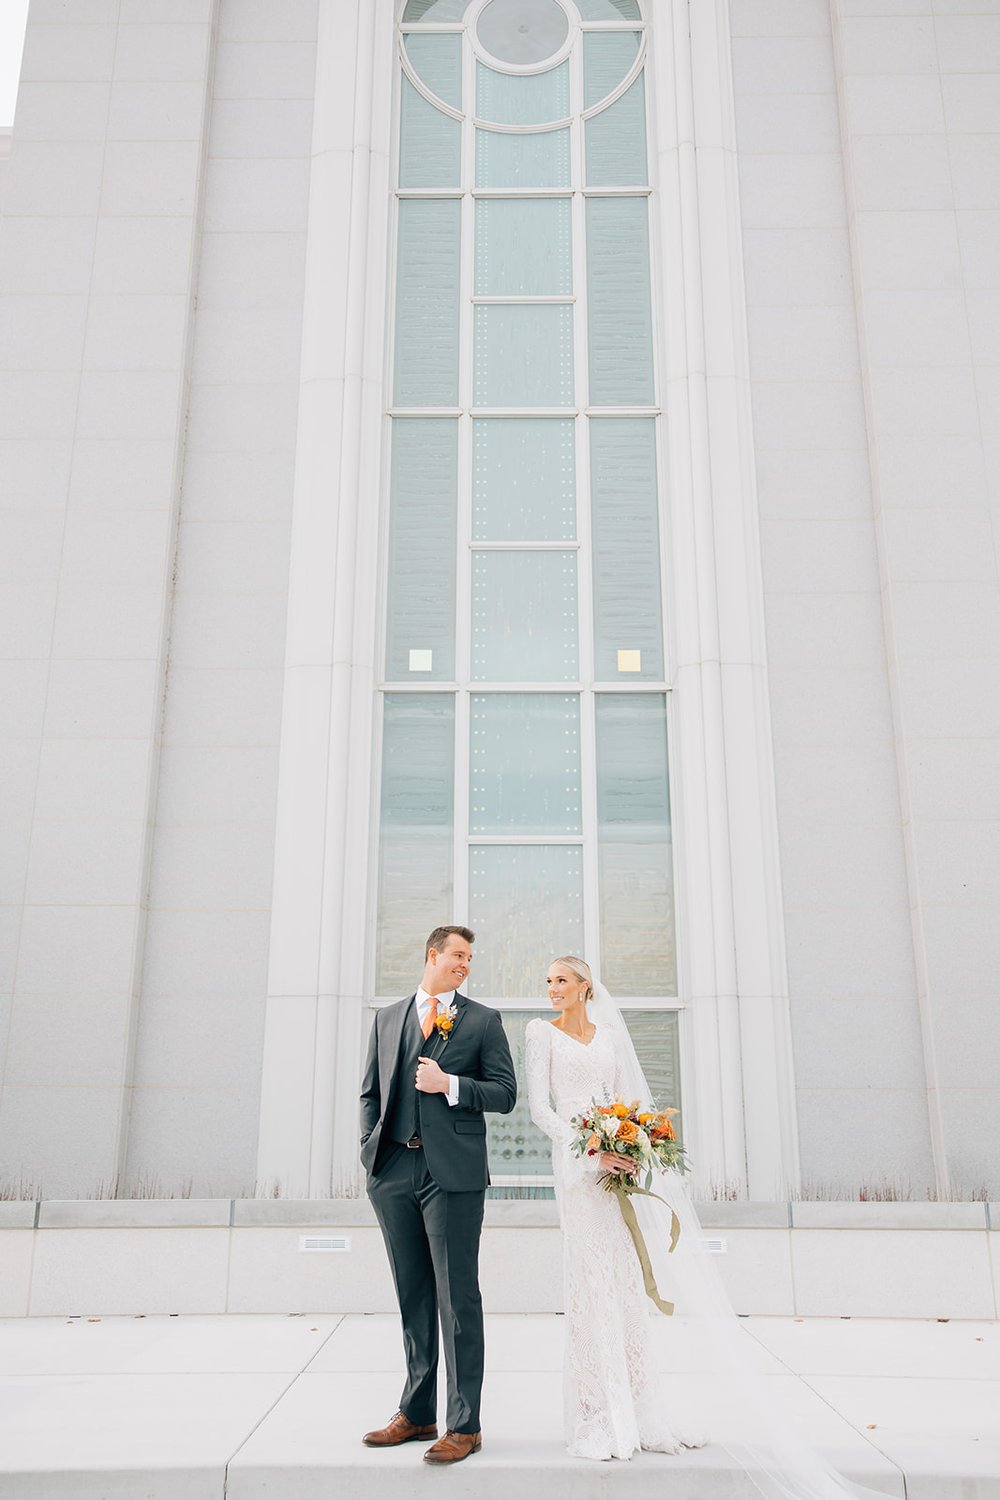 Anthology Print Wedding Invitations - Utah Wedding Venue - Utah Wedding Photographer - Boho Fall Wedding Inspiration - Utah Wedding Planner - River Bridge Wedding Venue0 (5).jpg